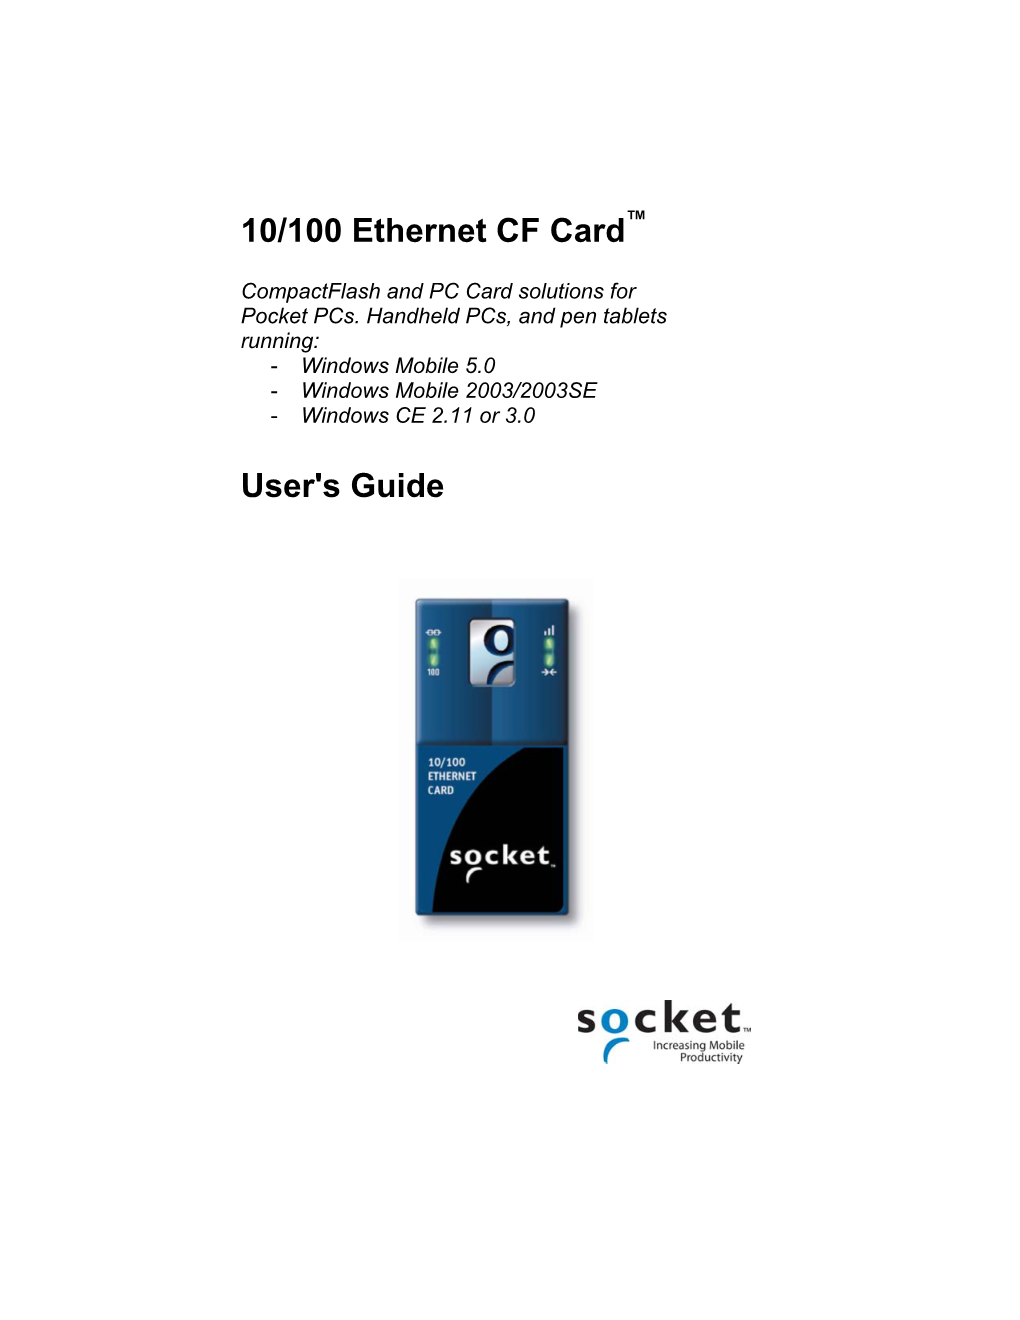 Socket 10/100 Ethernet CF Card User's Guide